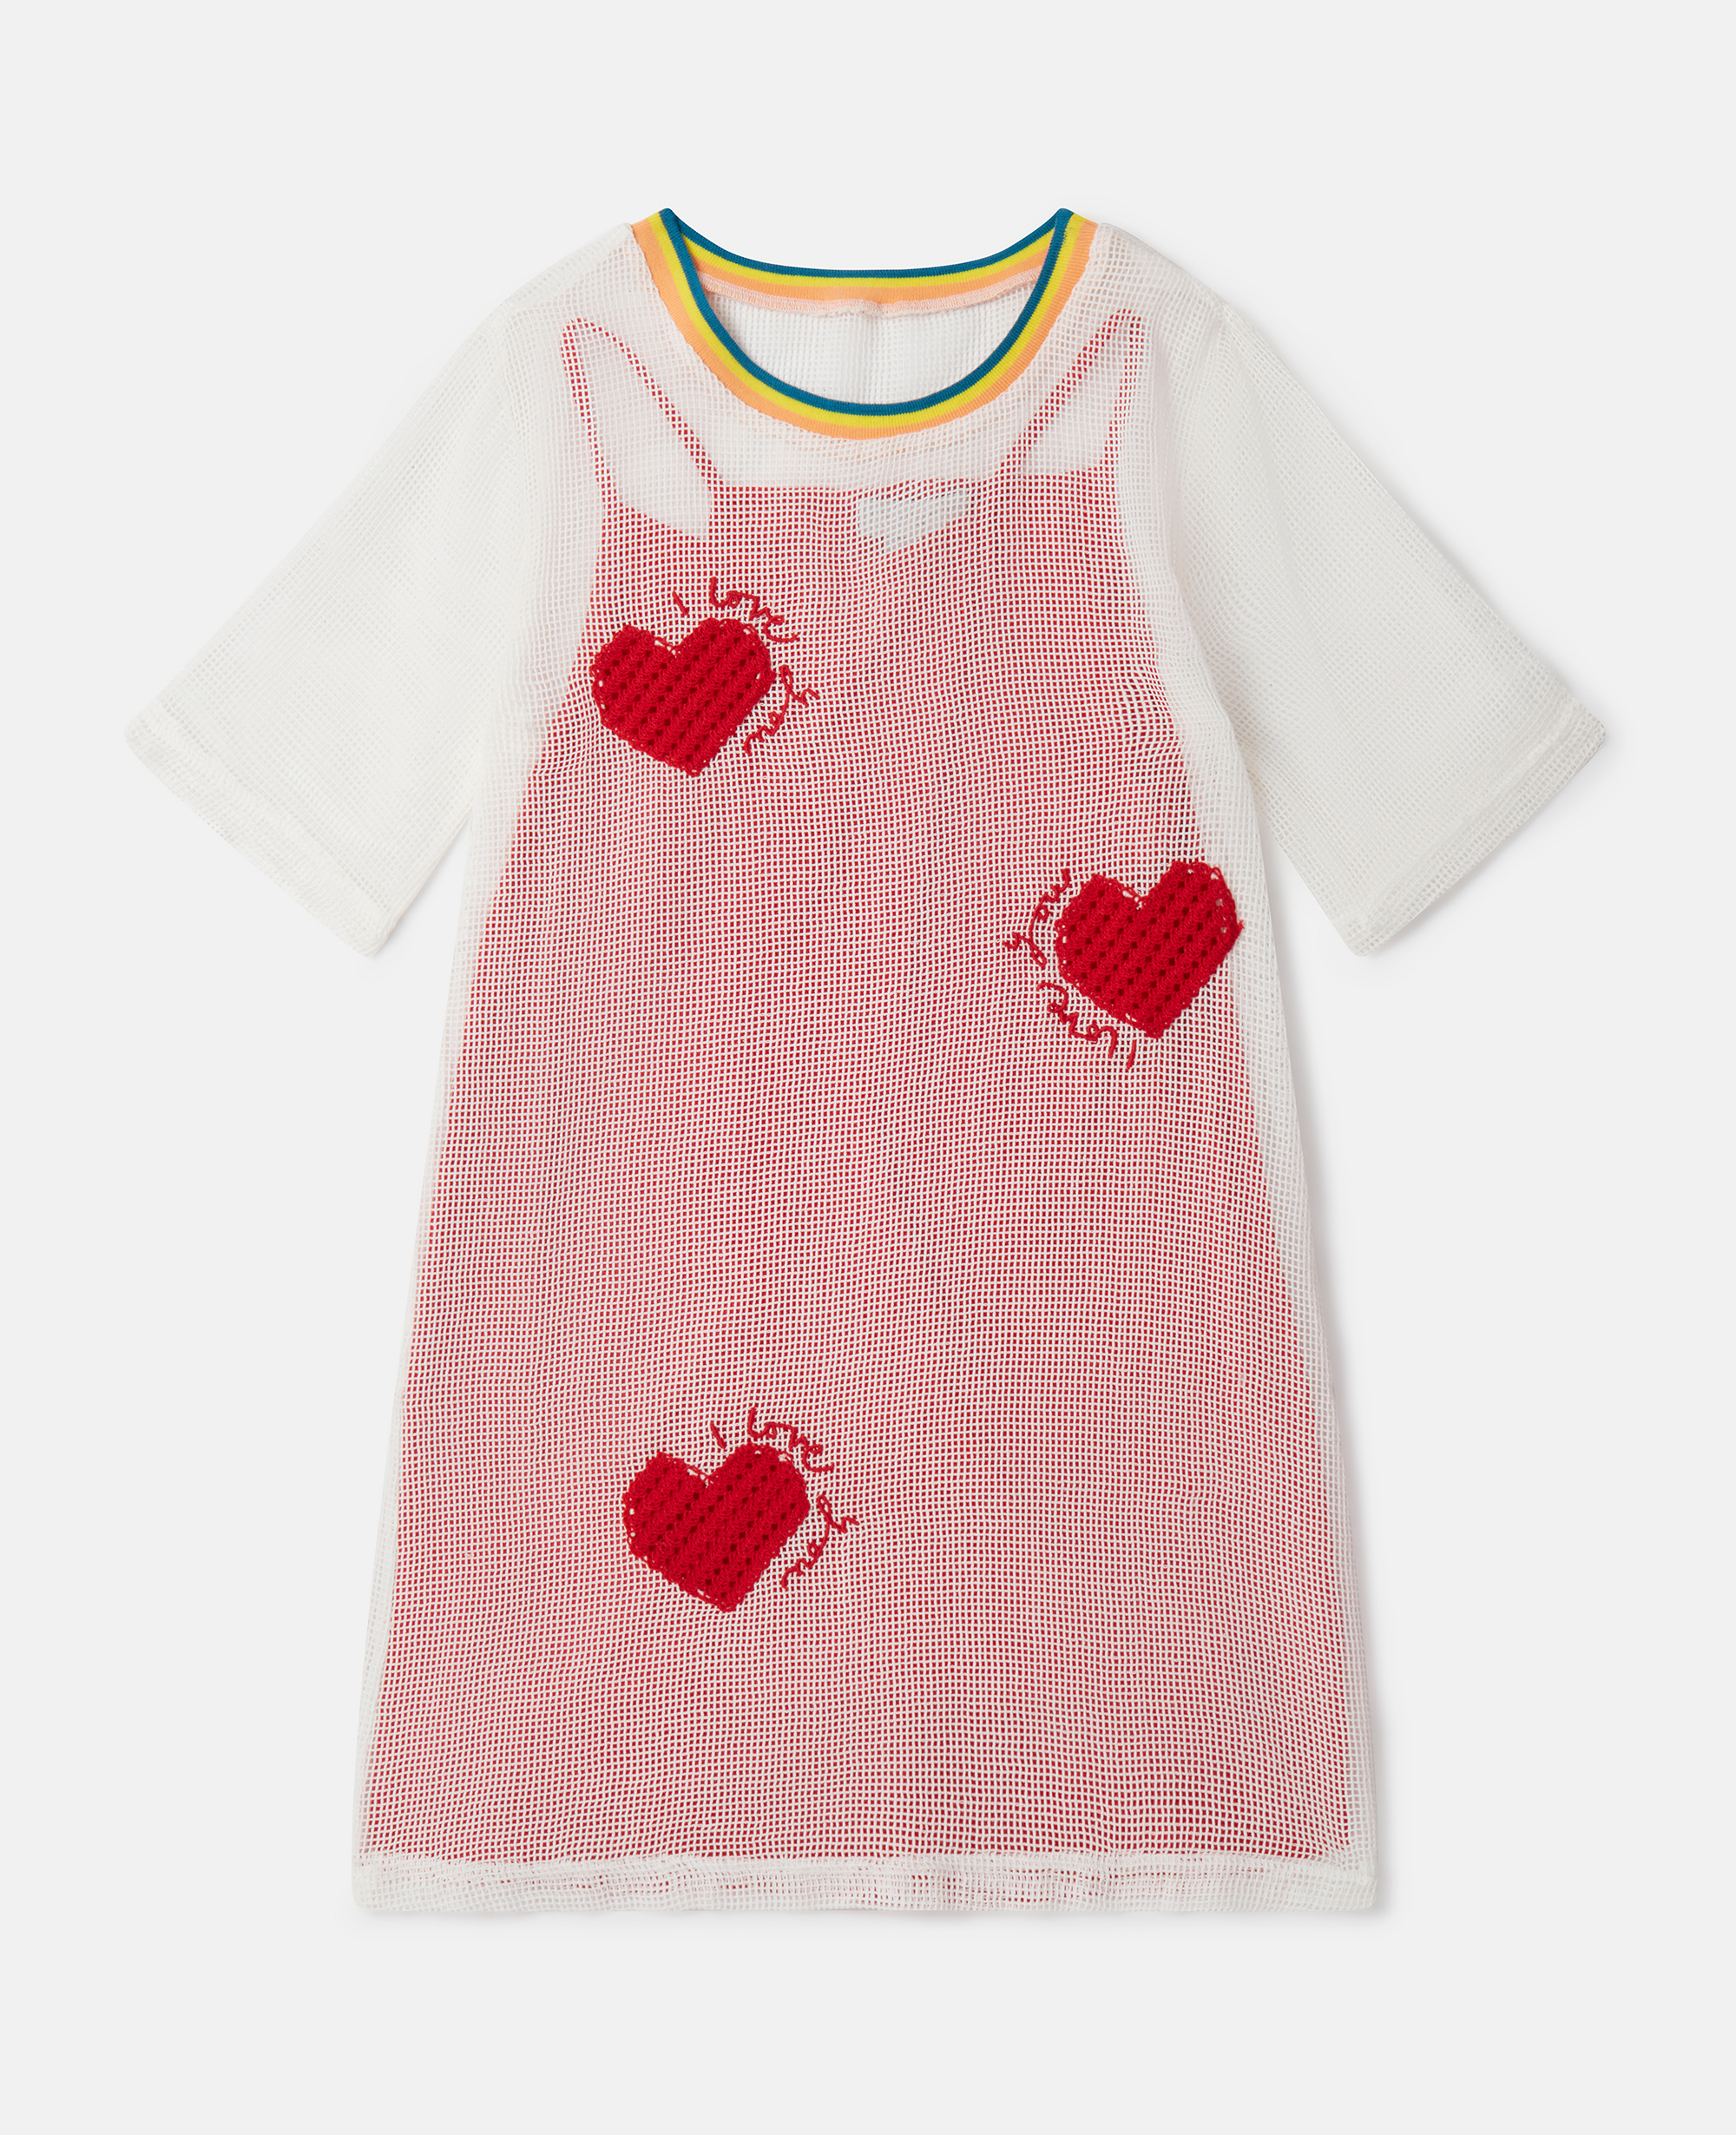 stella mccartney - robe t-shirt en mesh avec caurs, multicolore, taille: 10